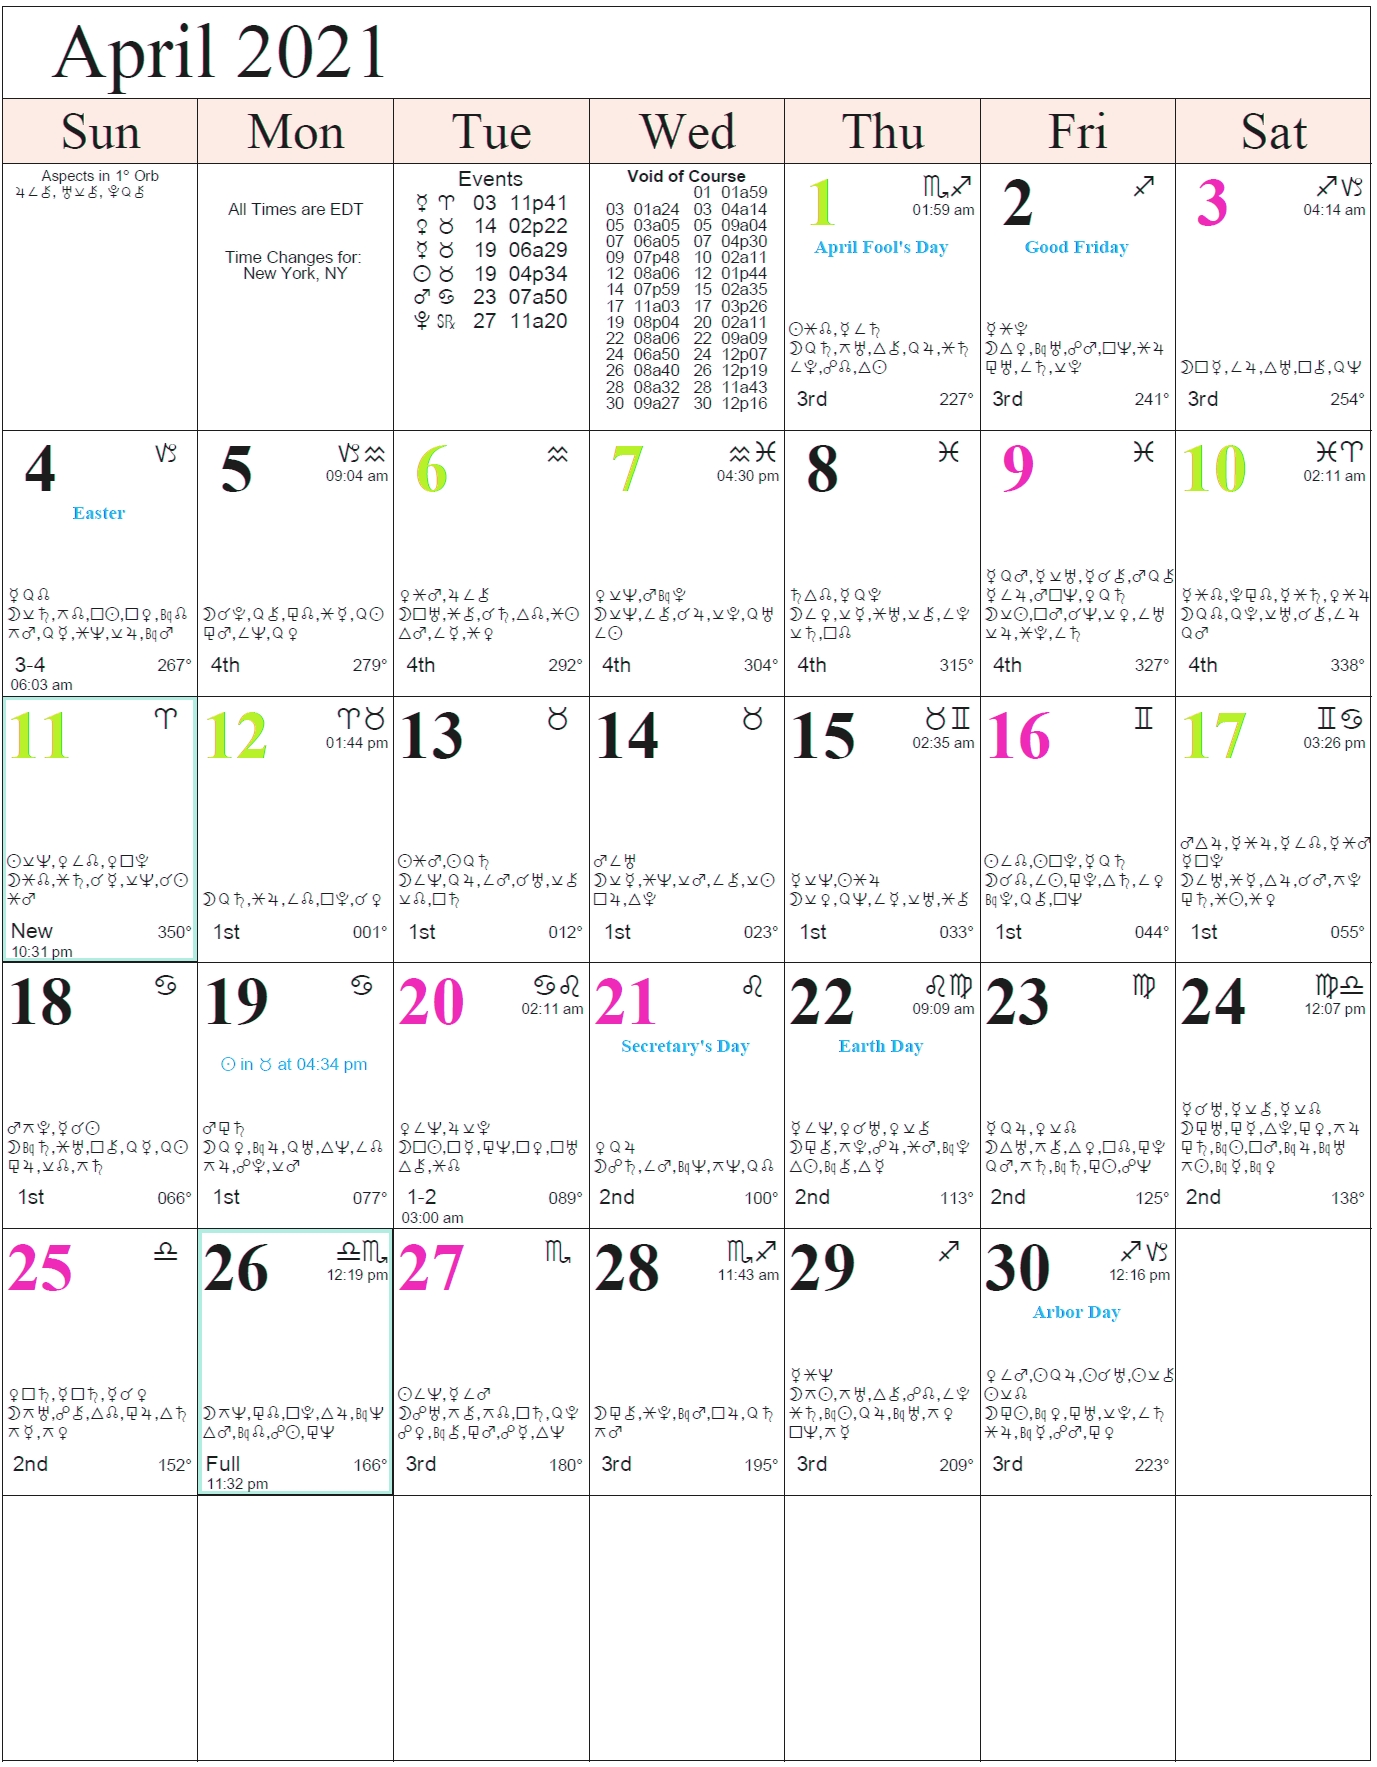 Monthly Astrology Calendars Calendar Of The Zodiac Signs